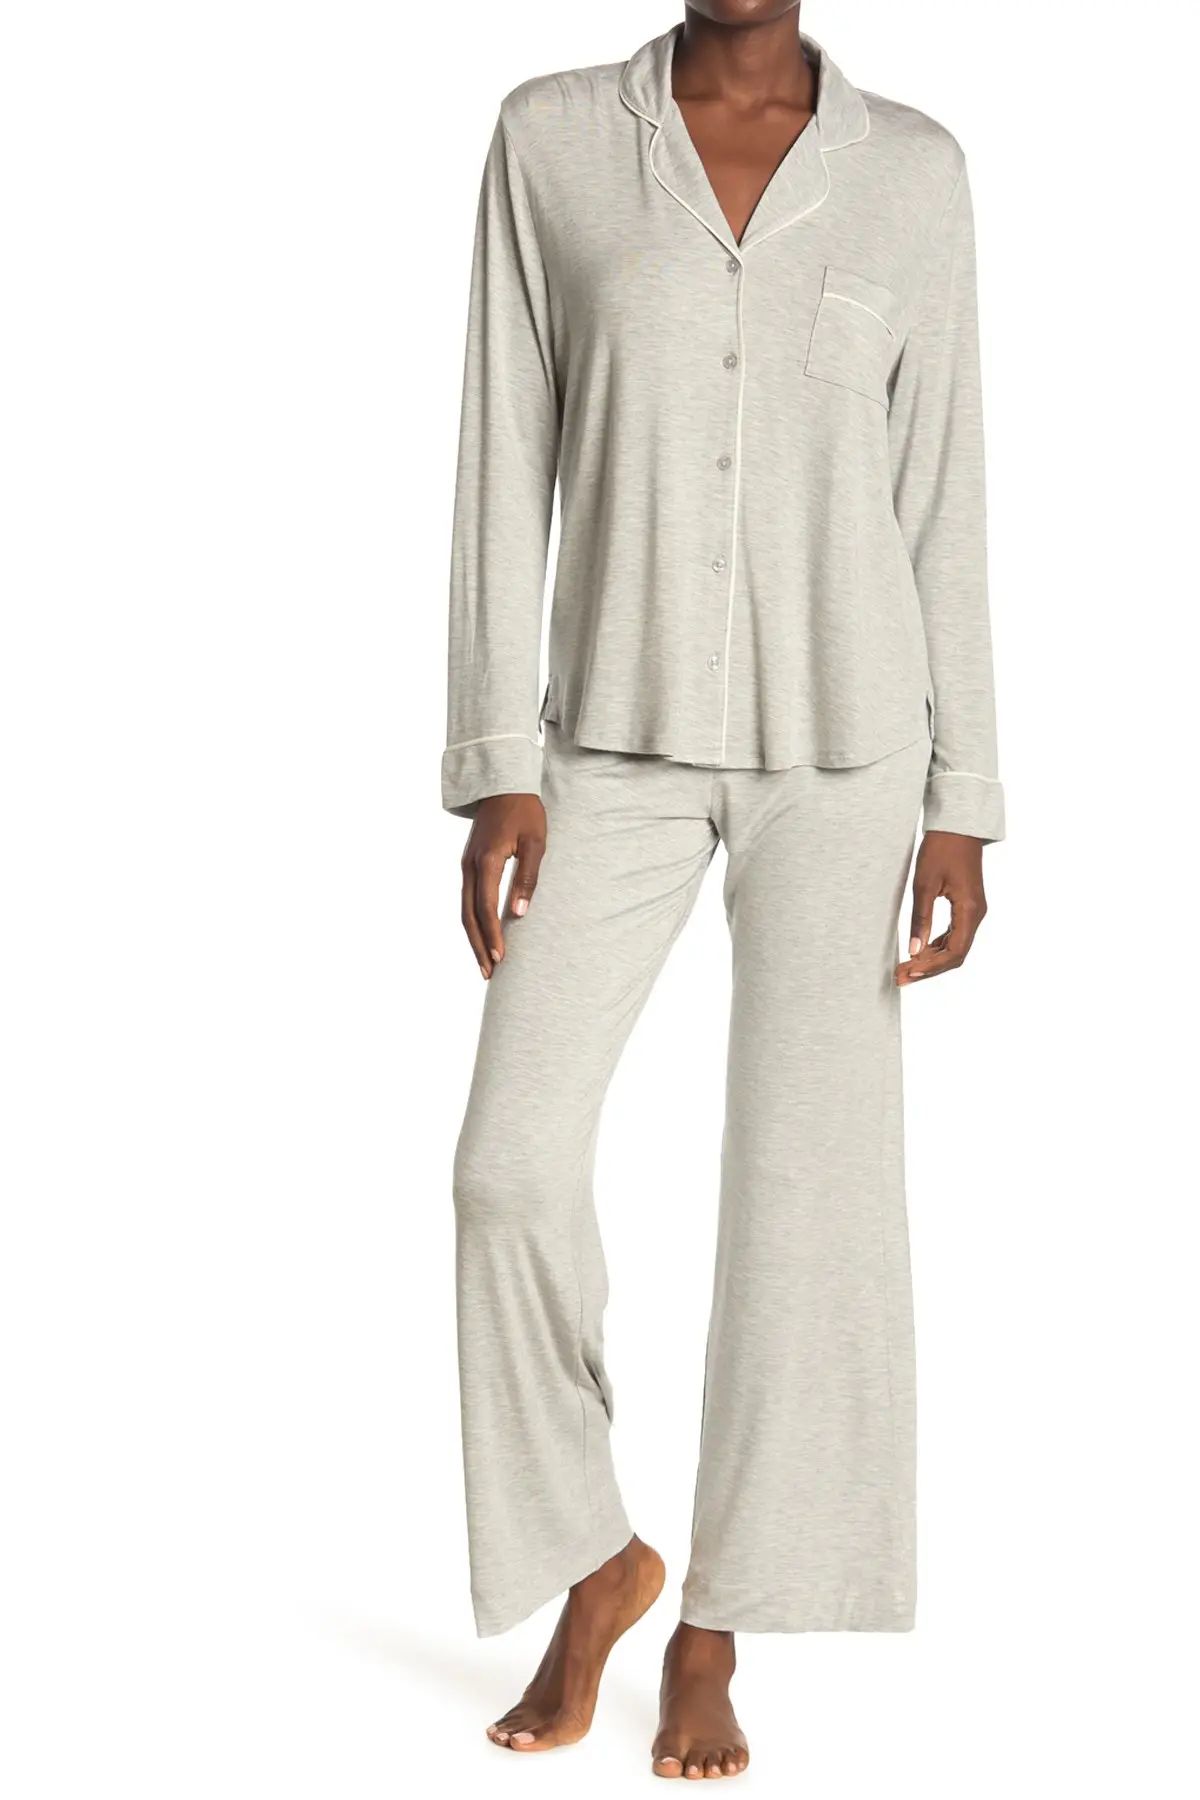 shimera | Tranquility Long Sleeve Shirt & Pants 2-Piece Pajama Set | Nordstrom Rack | Nordstrom Rack